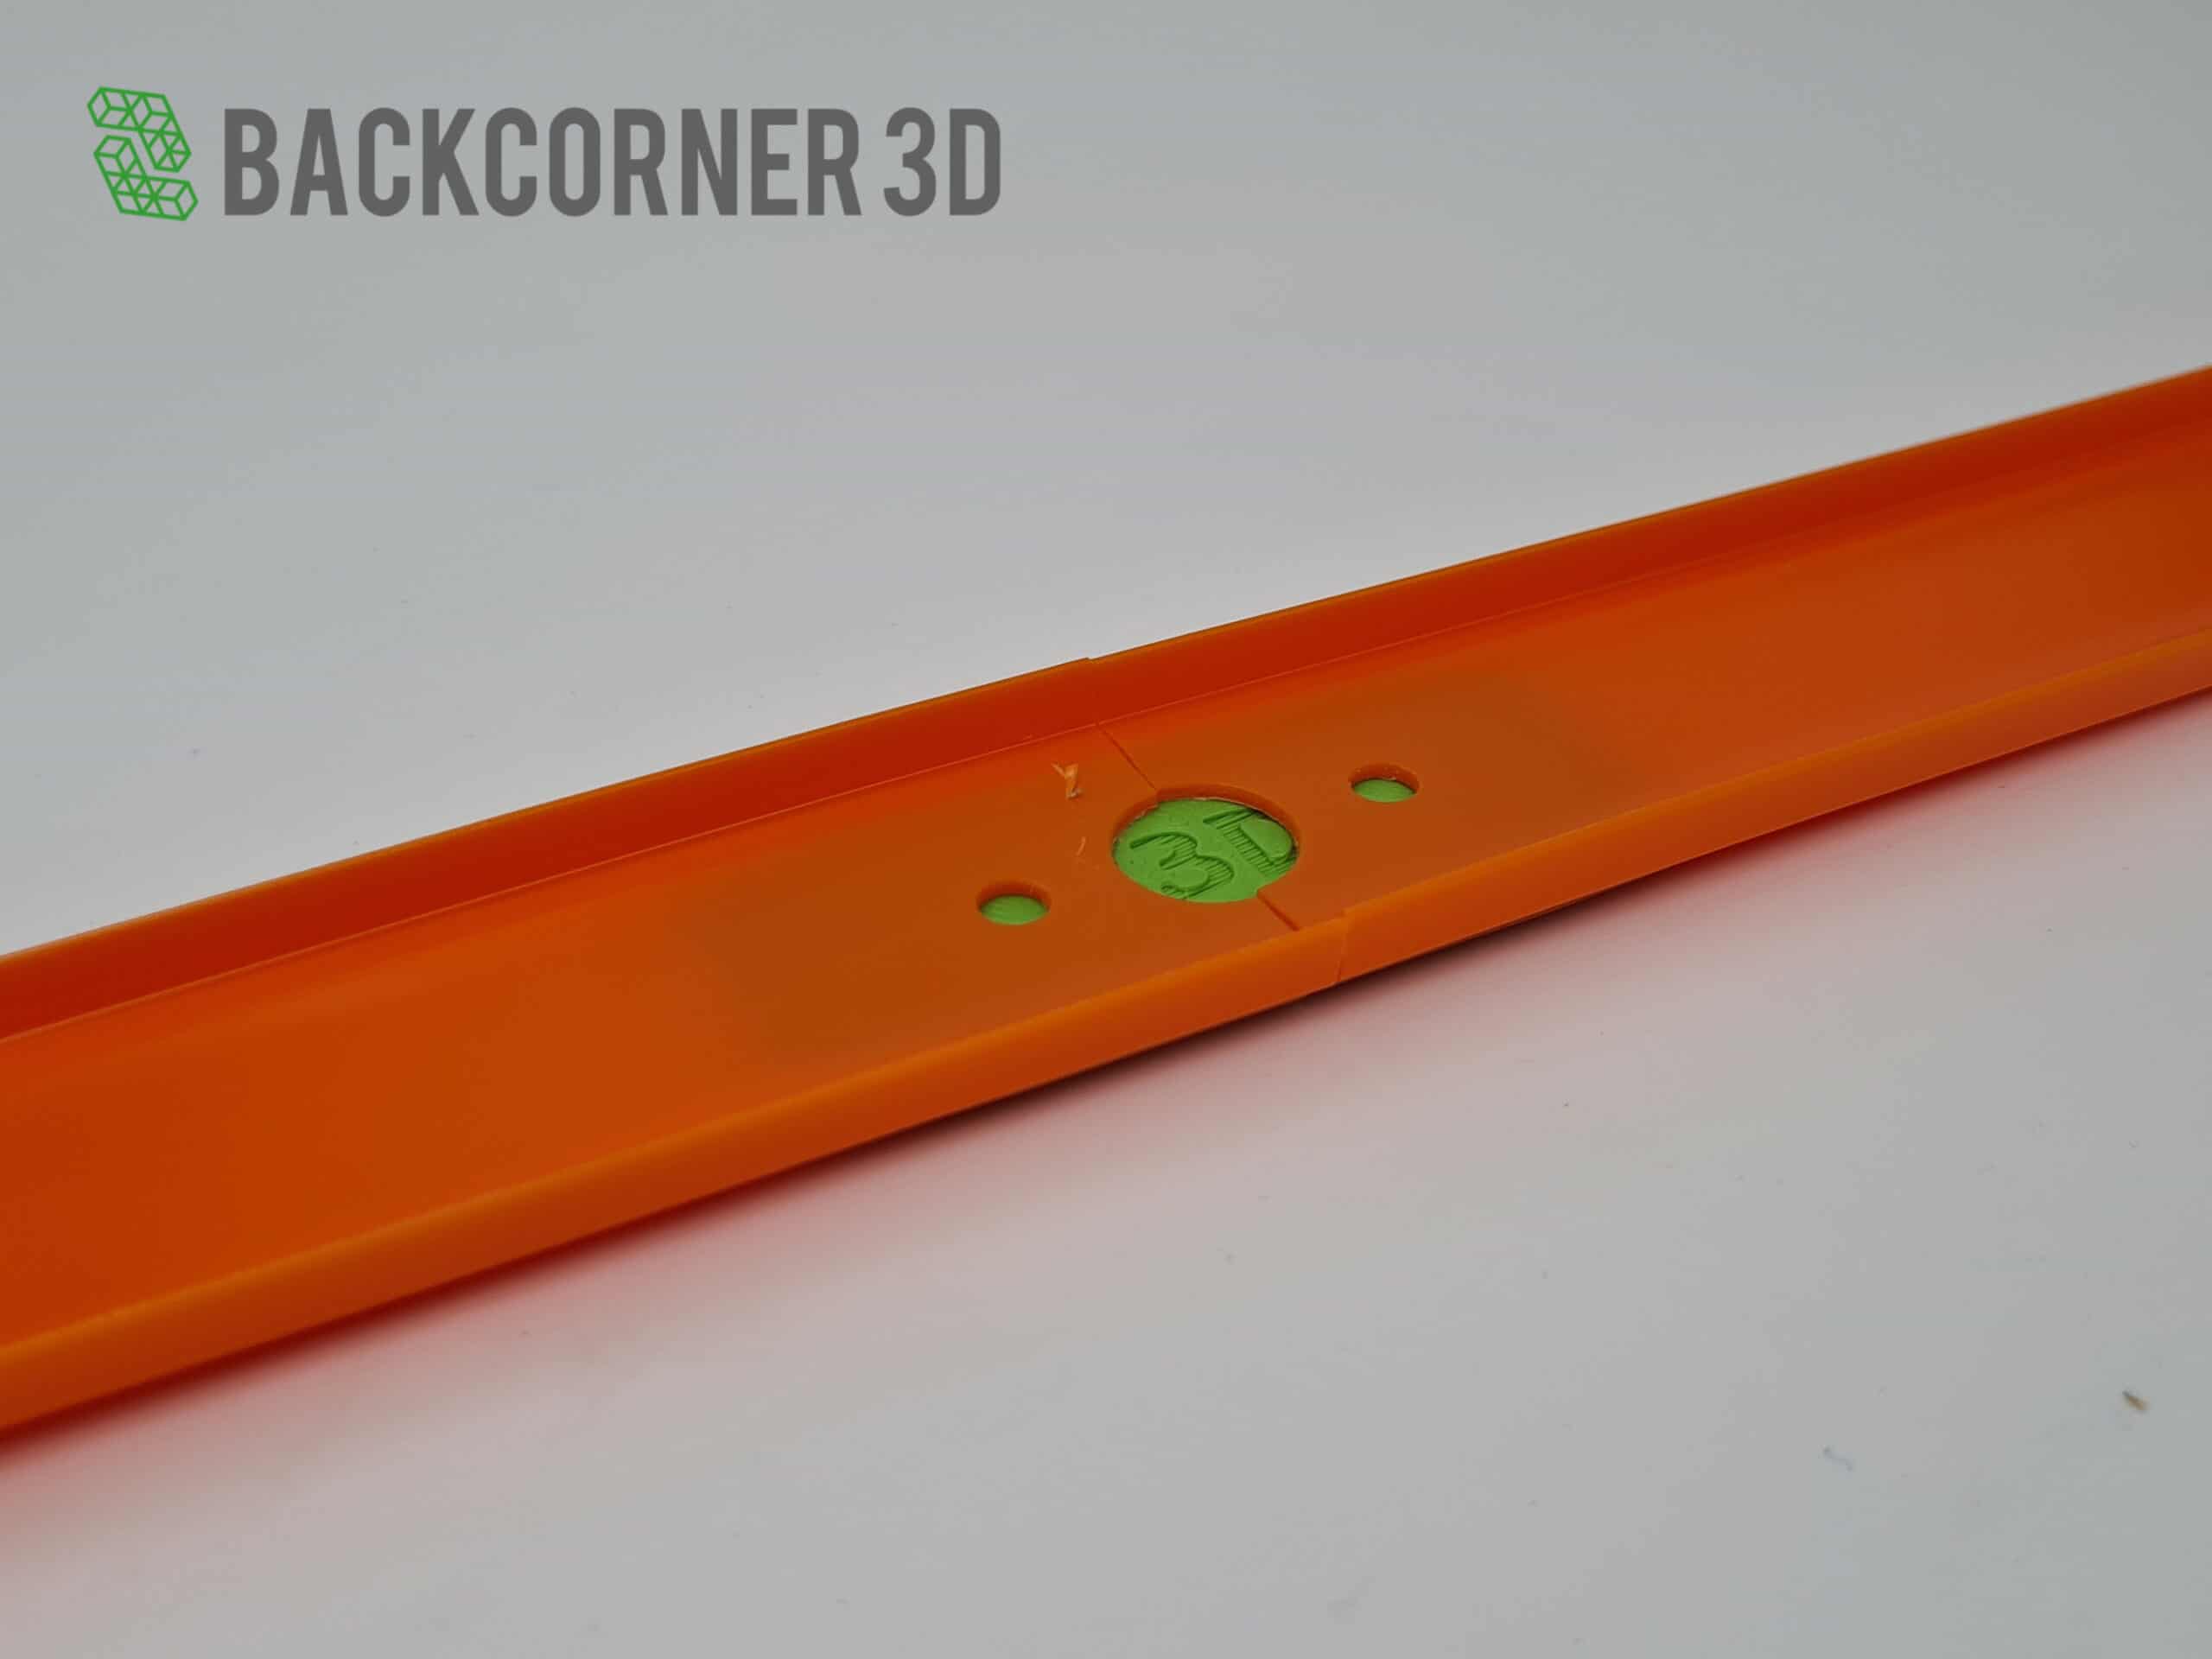 Hot Wheels Track Connector - Backcorner 3D